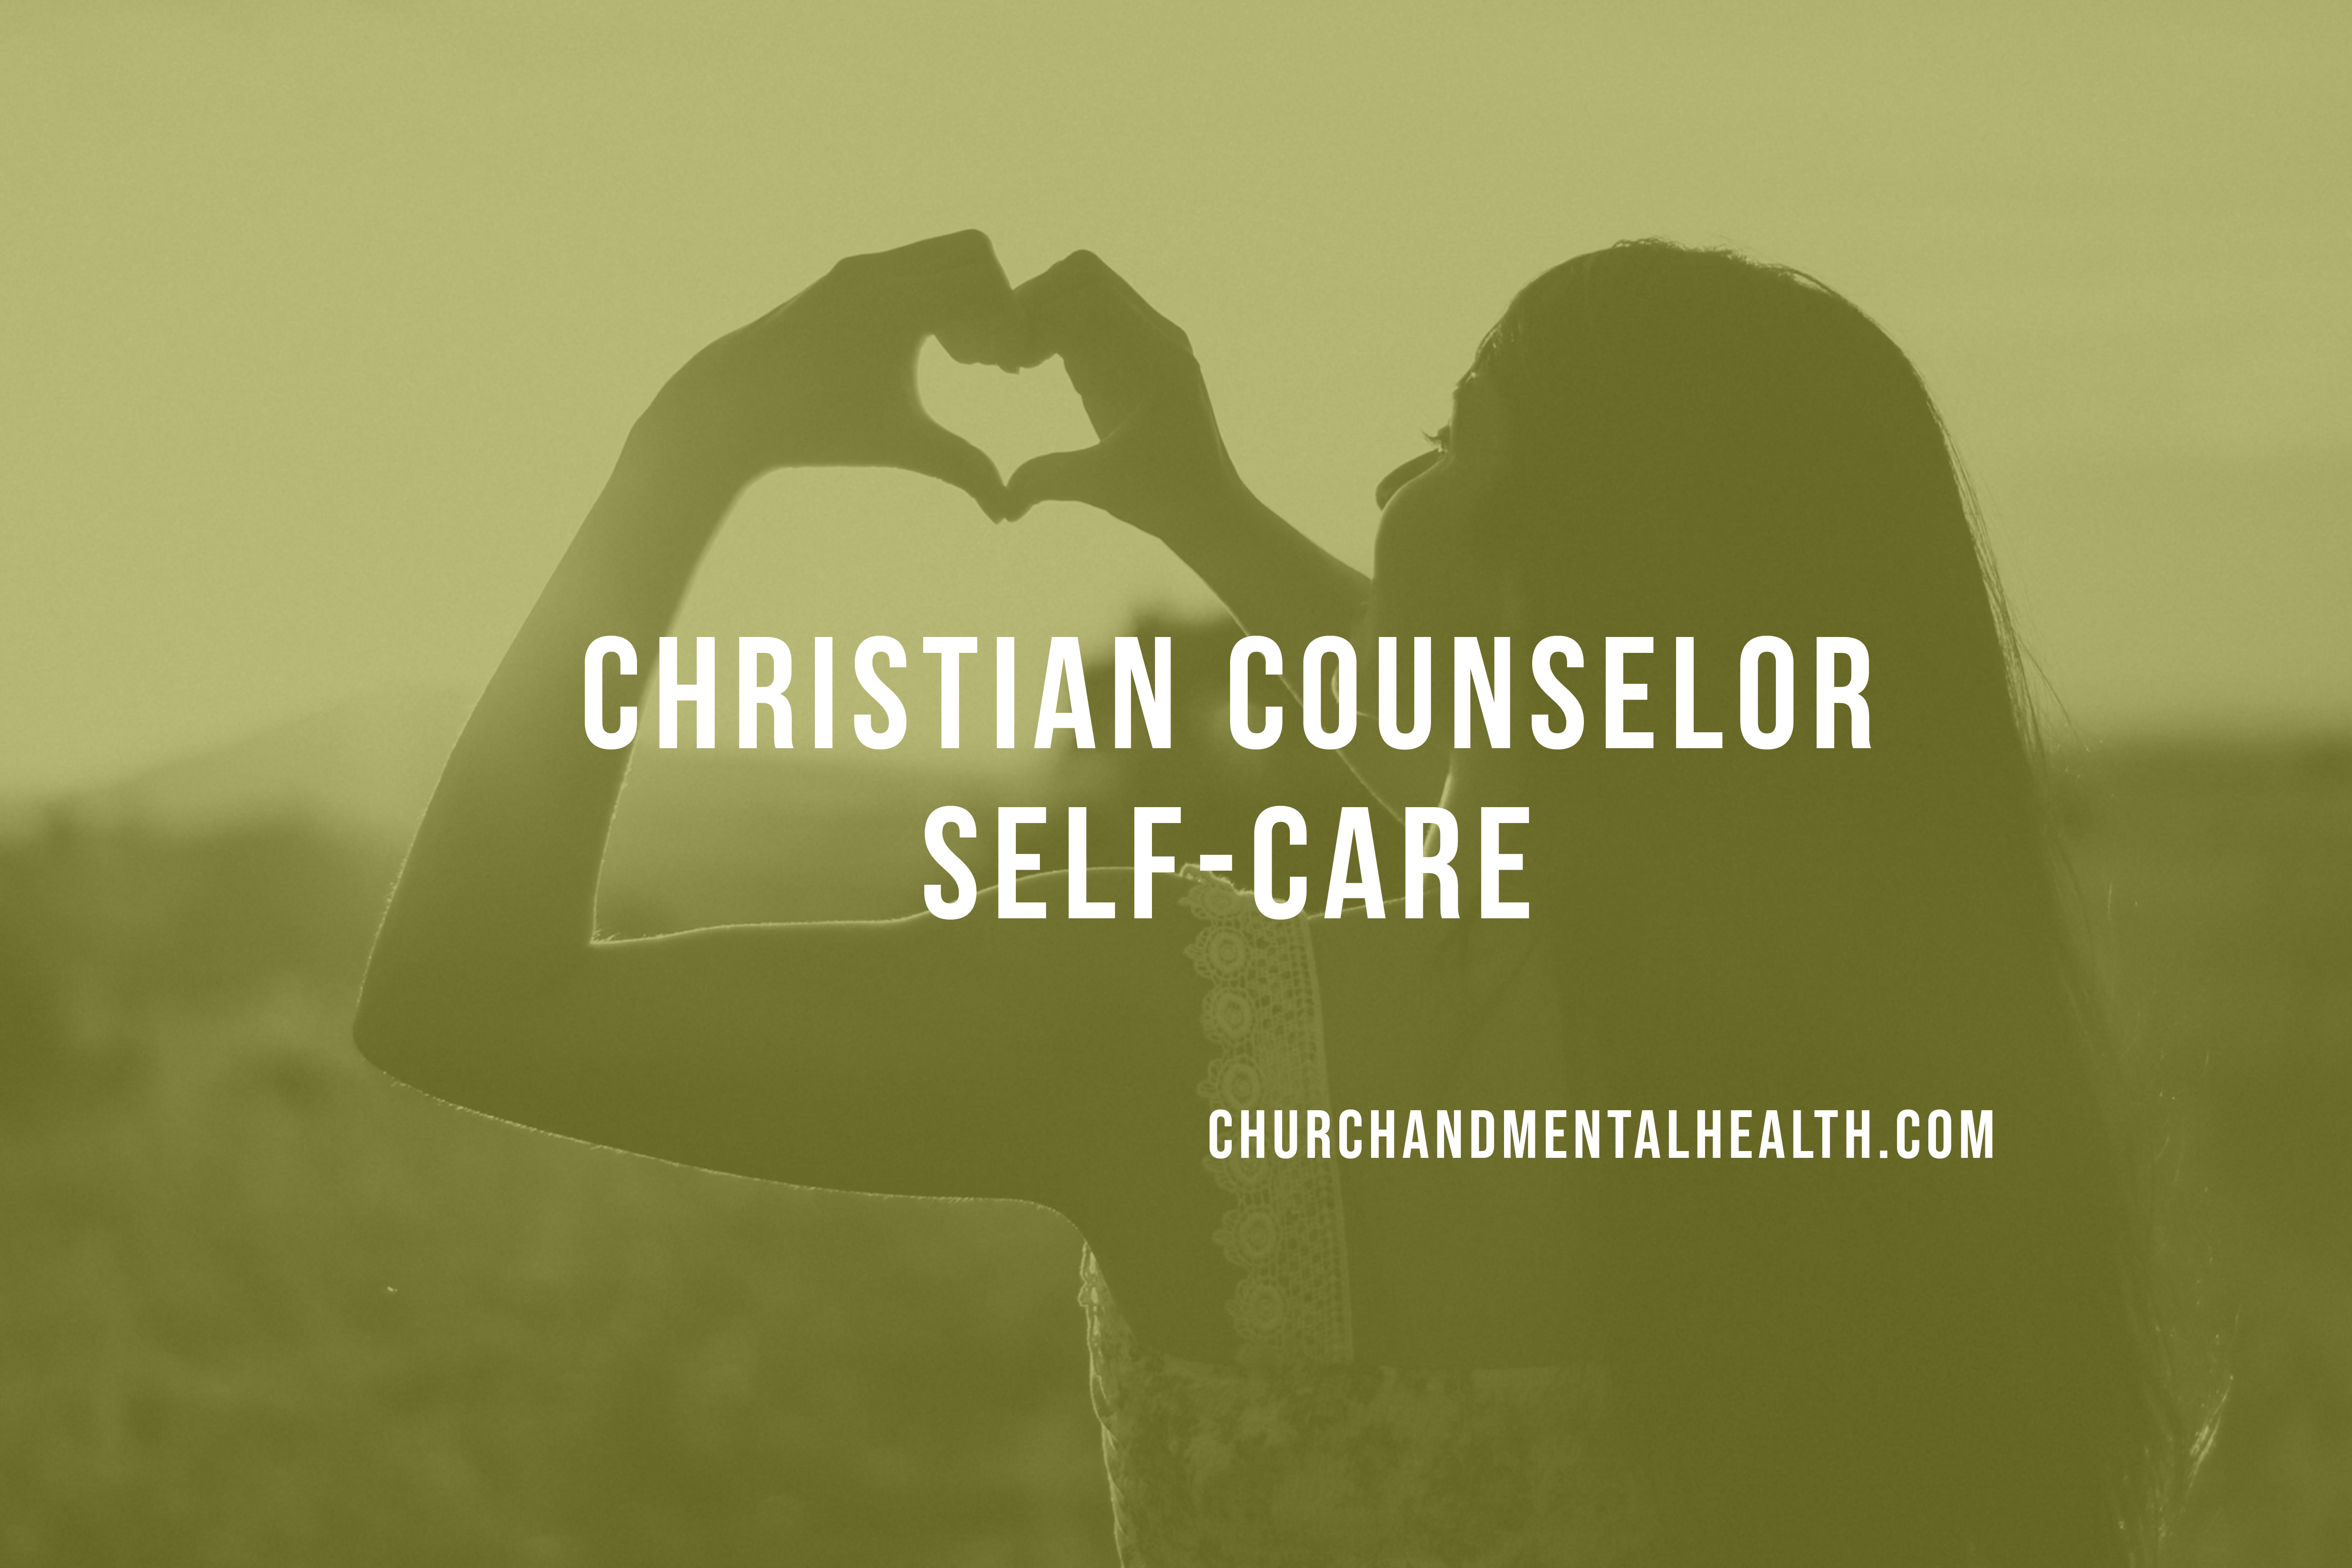 Christian Counselor Self-Care